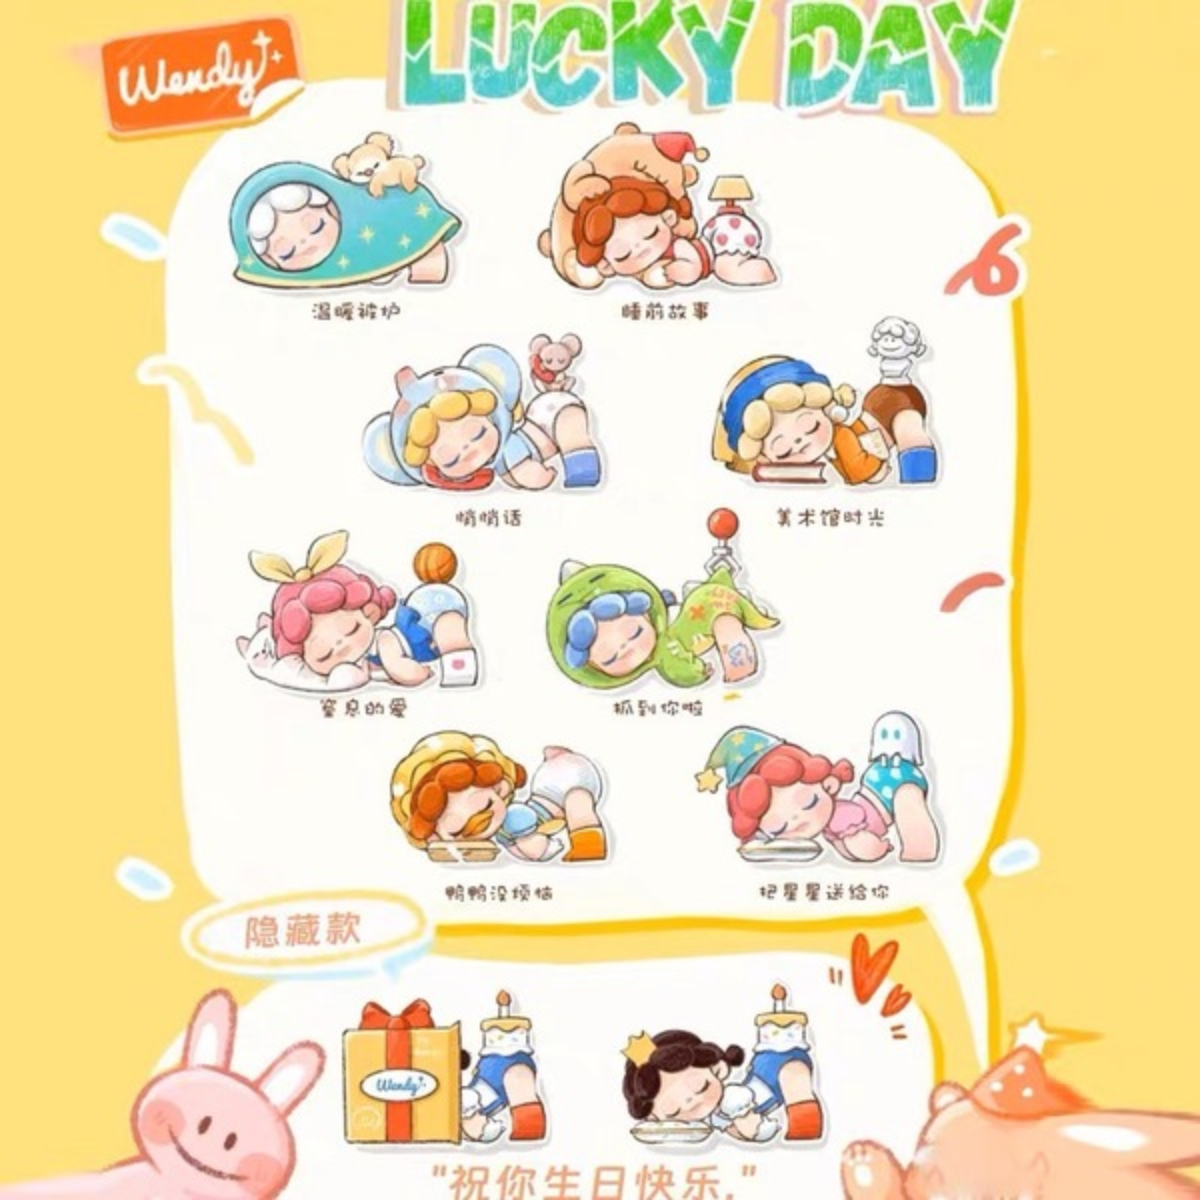 Dodo Sugar Wendy Dreamland Collector 2nd Generation Today's Lucky Day Series-Single Box (Random)-Dodo Sugar-Ace Cards & Collectibles